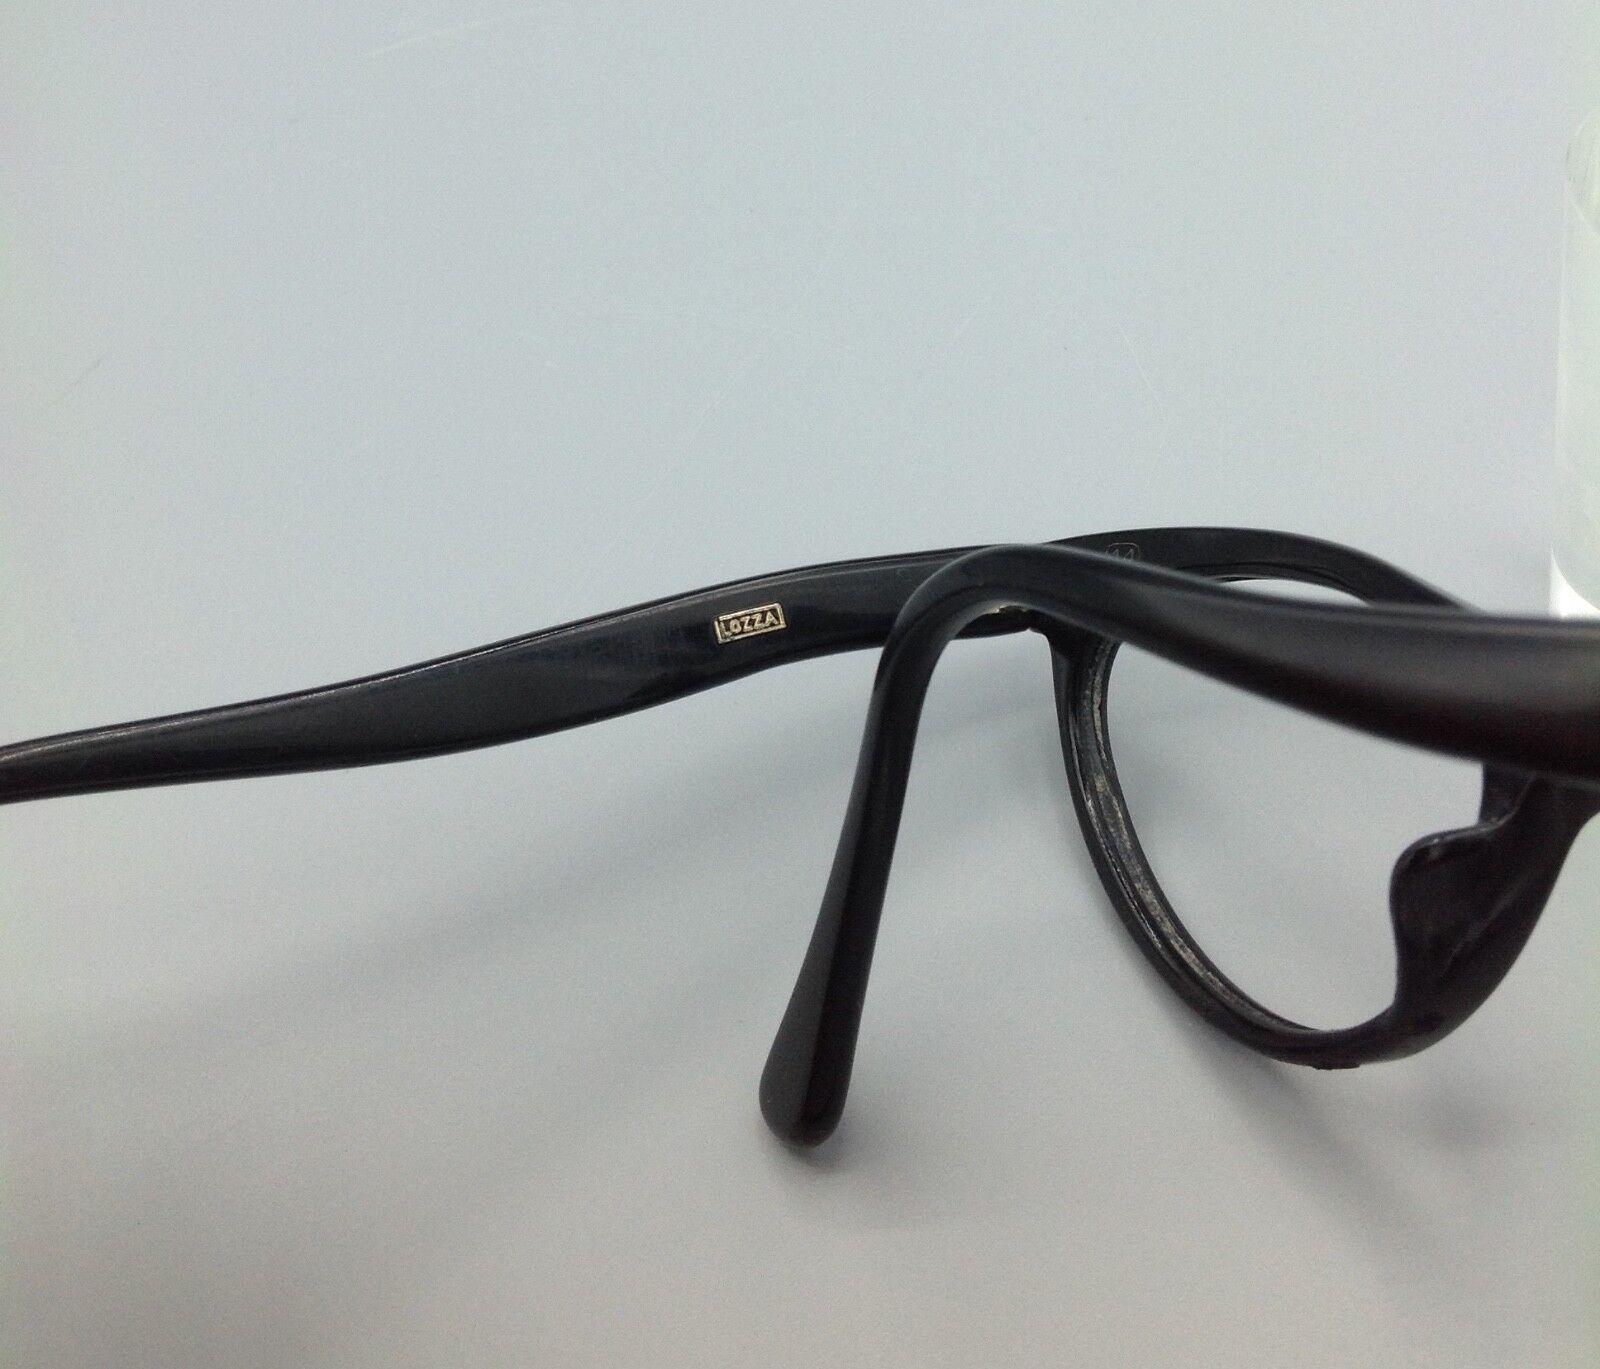 Lozza vintage occhiale eyewear frame brillen lunettes gafas